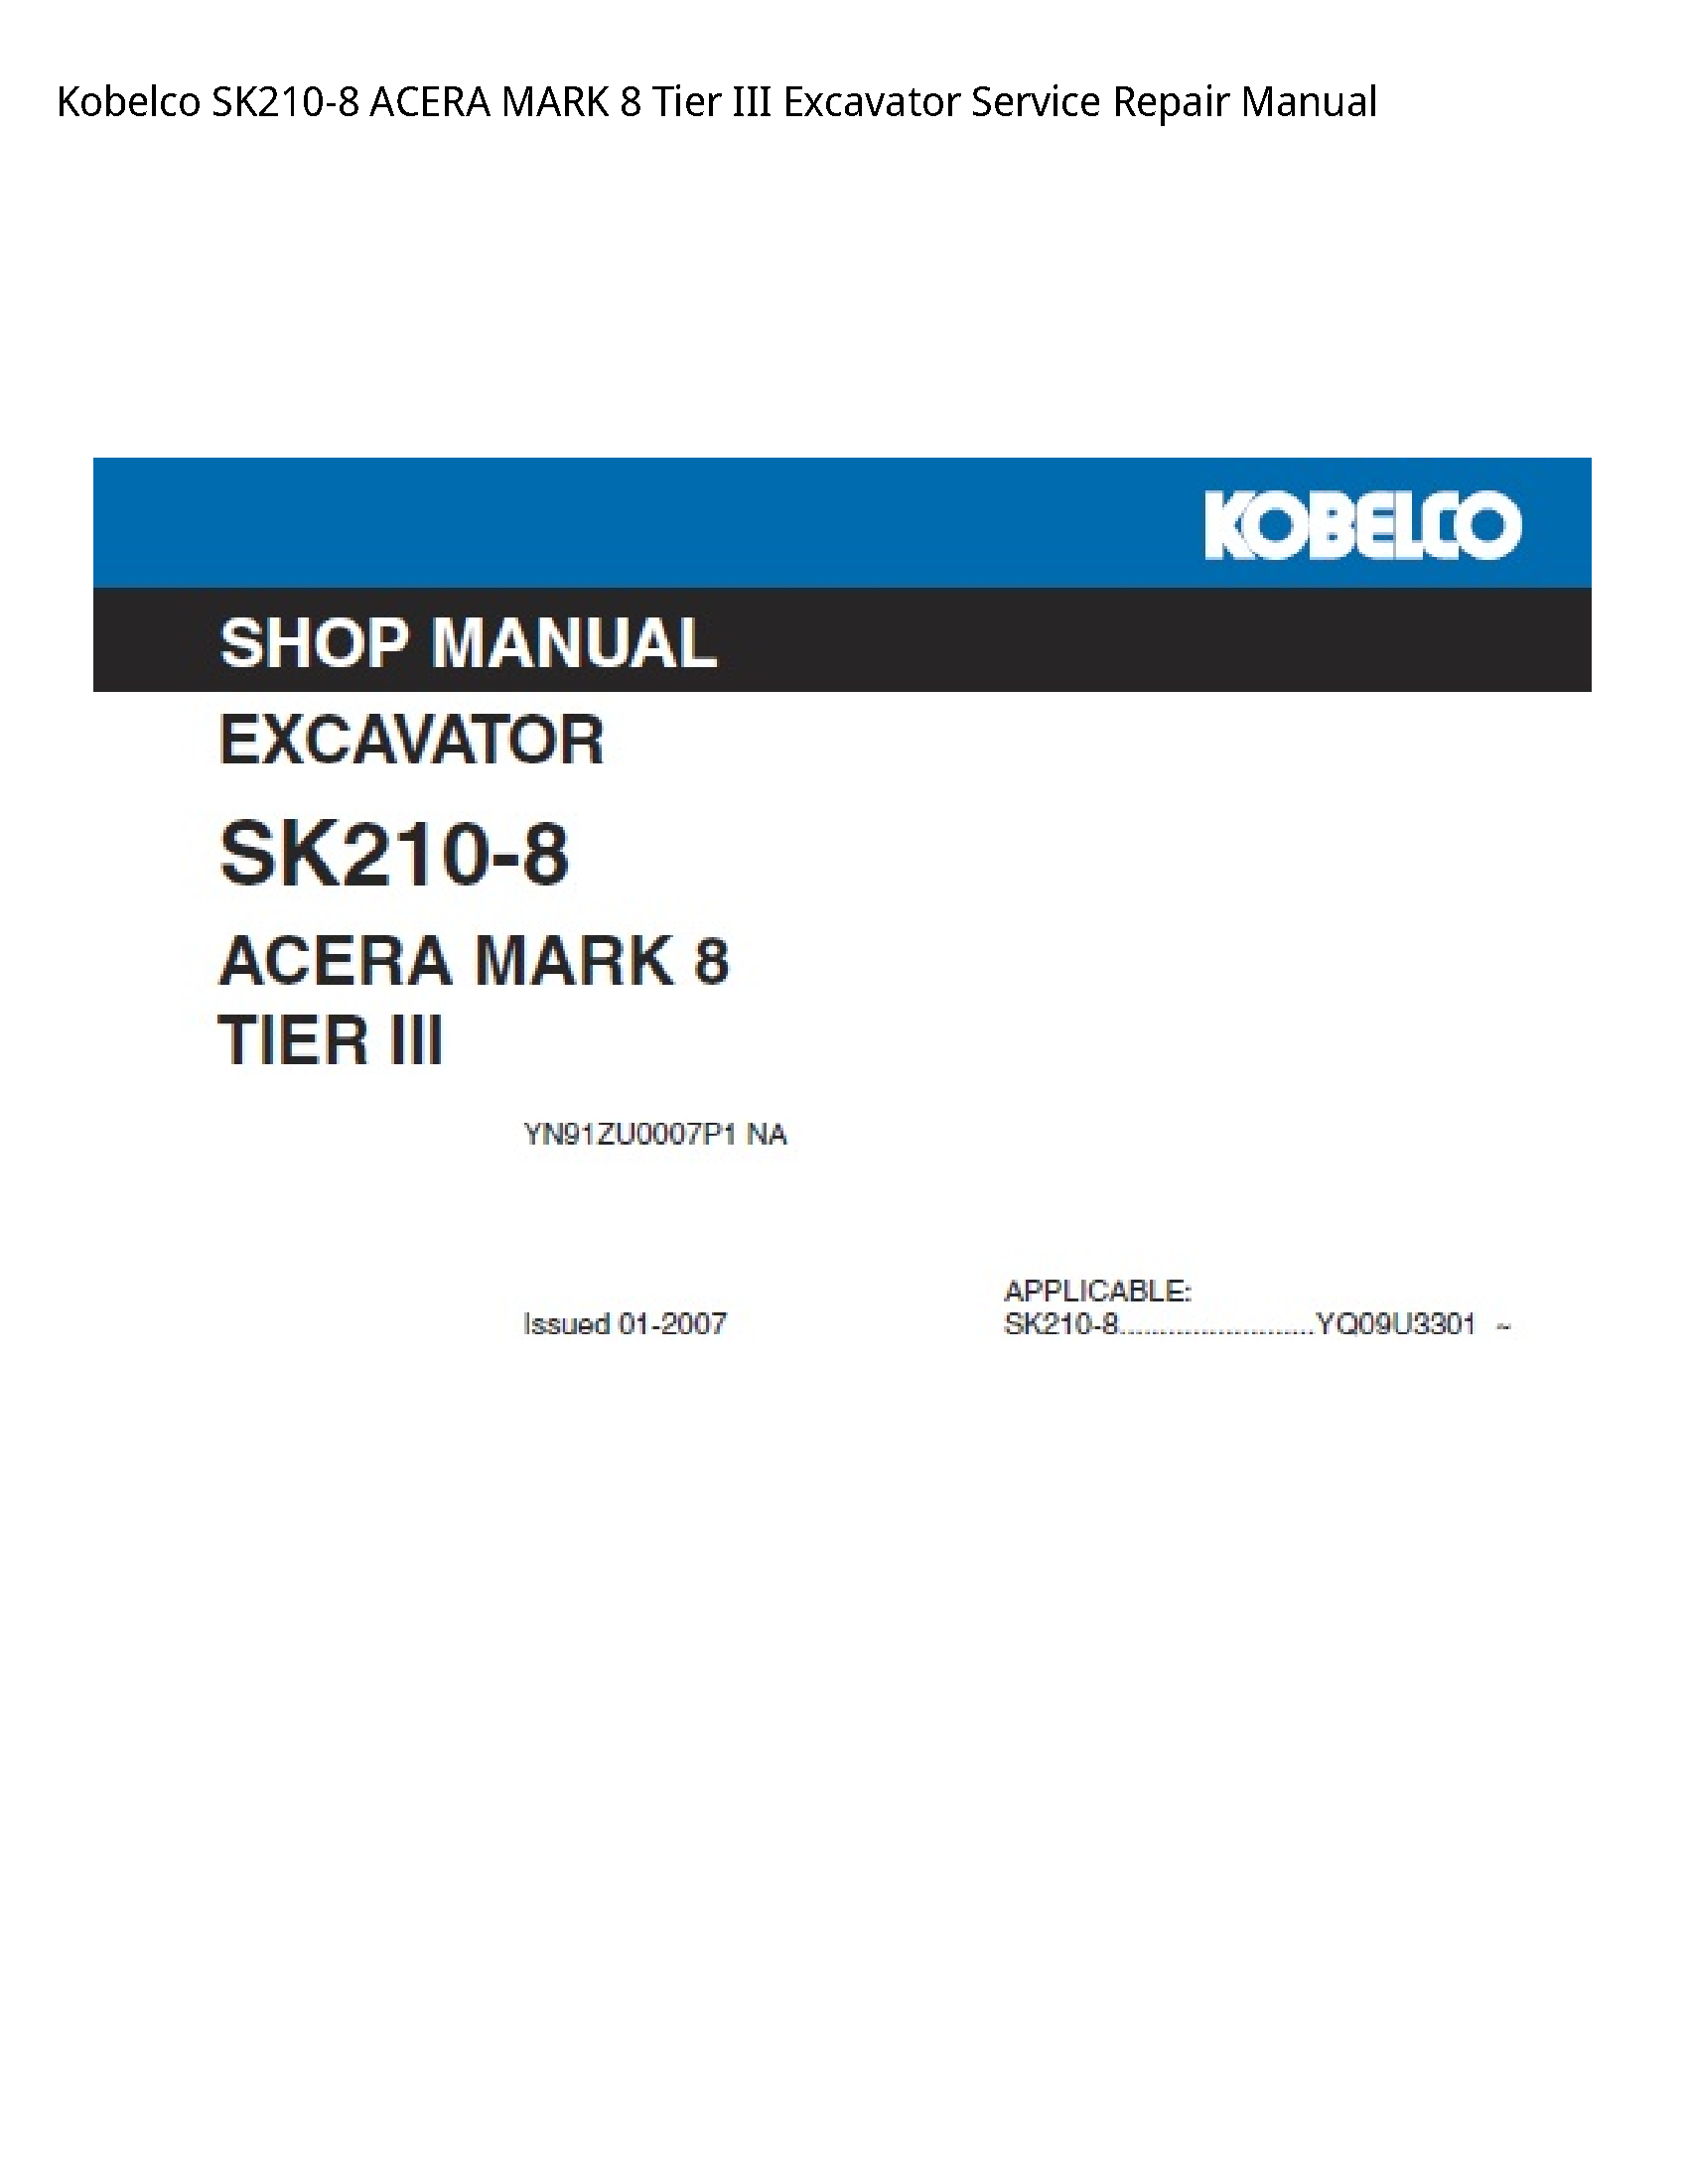 Kobelco SK210-8 ACERA MARK Tier III Excavator manual